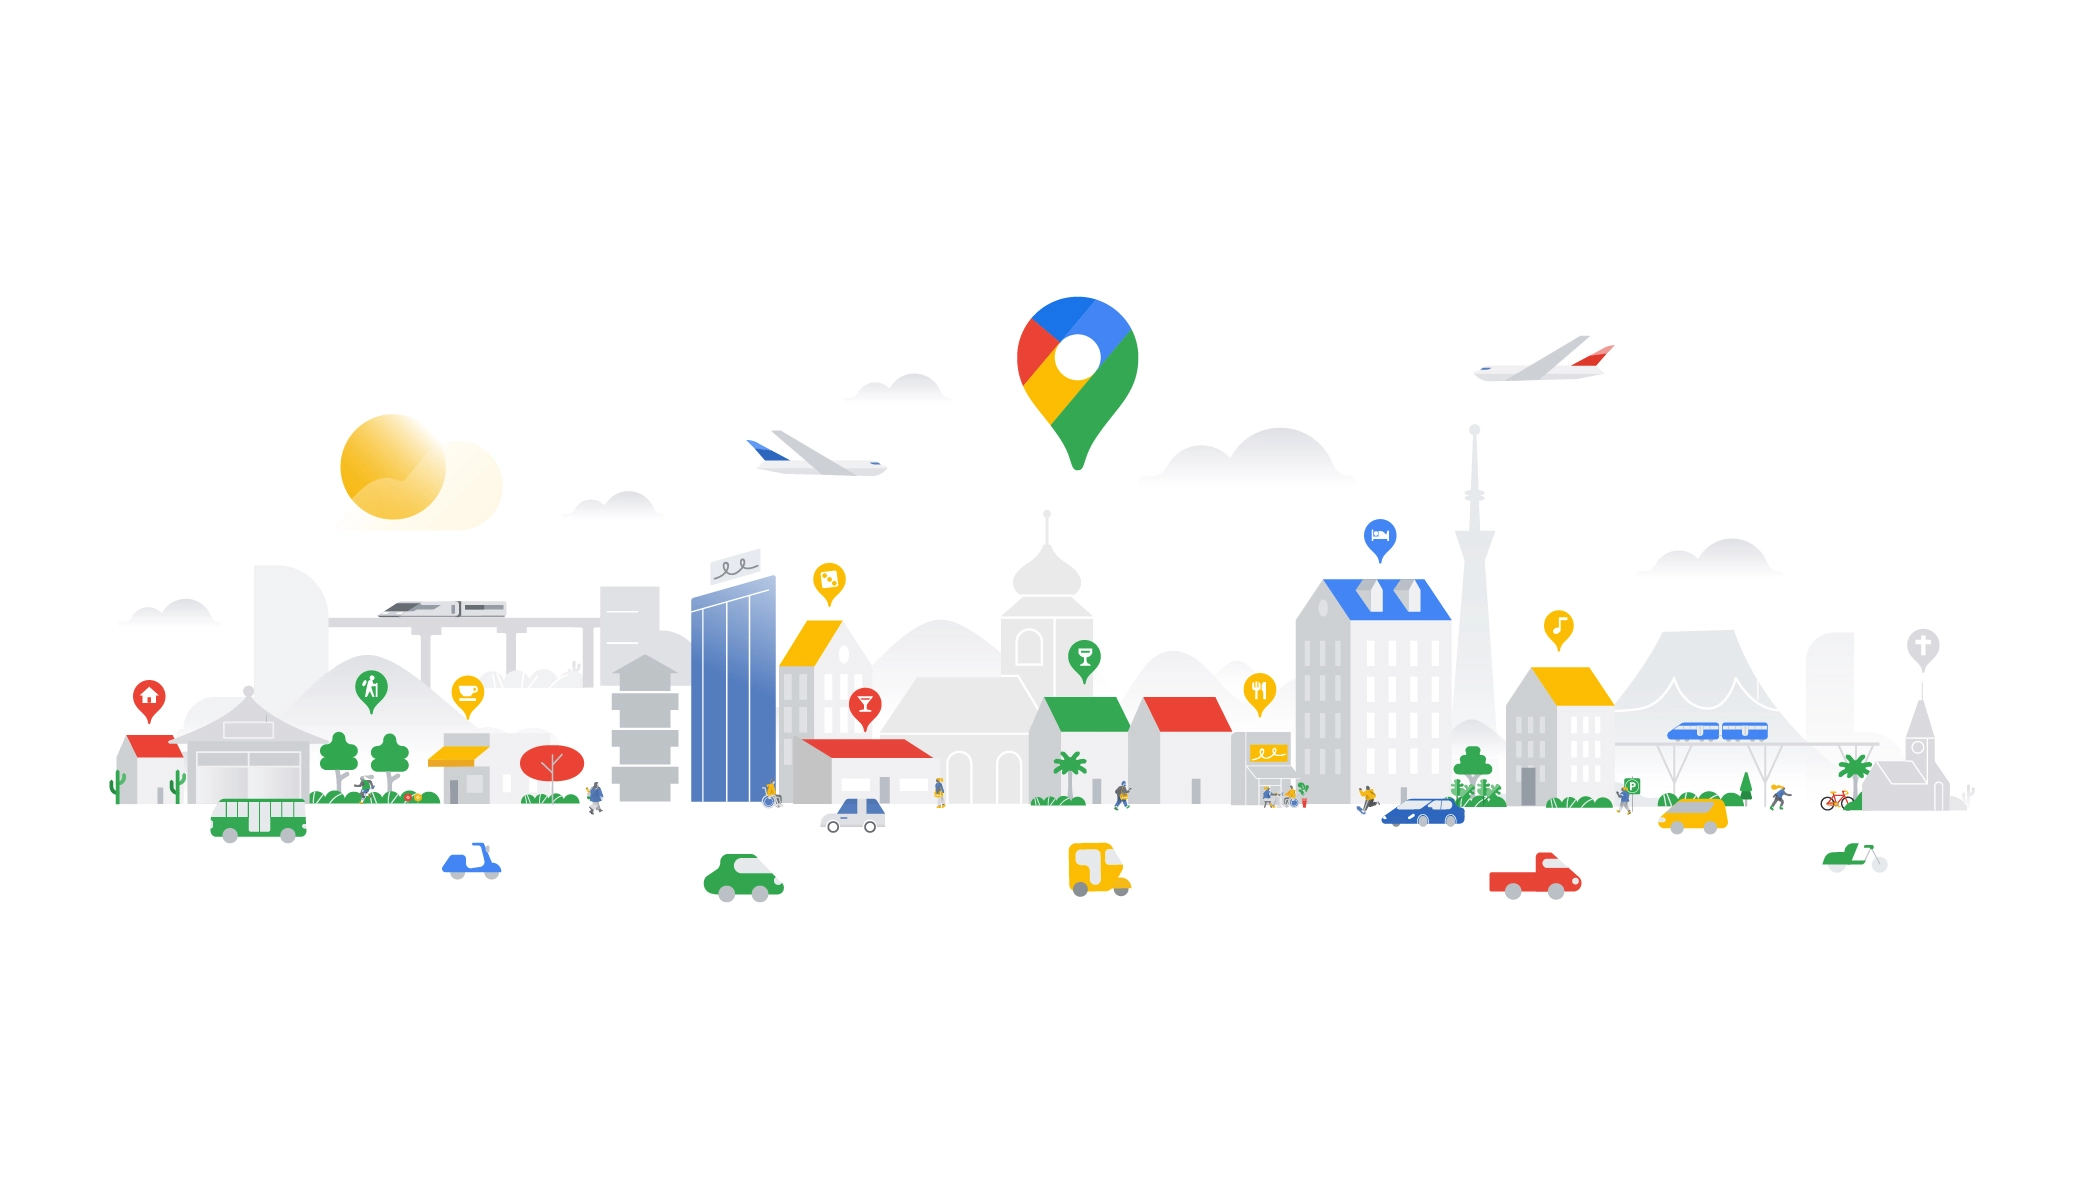 Google Maps Hadirkan Penjelajahan Dunia Tanpa Batas melalui XR dan Teknologi Cloud